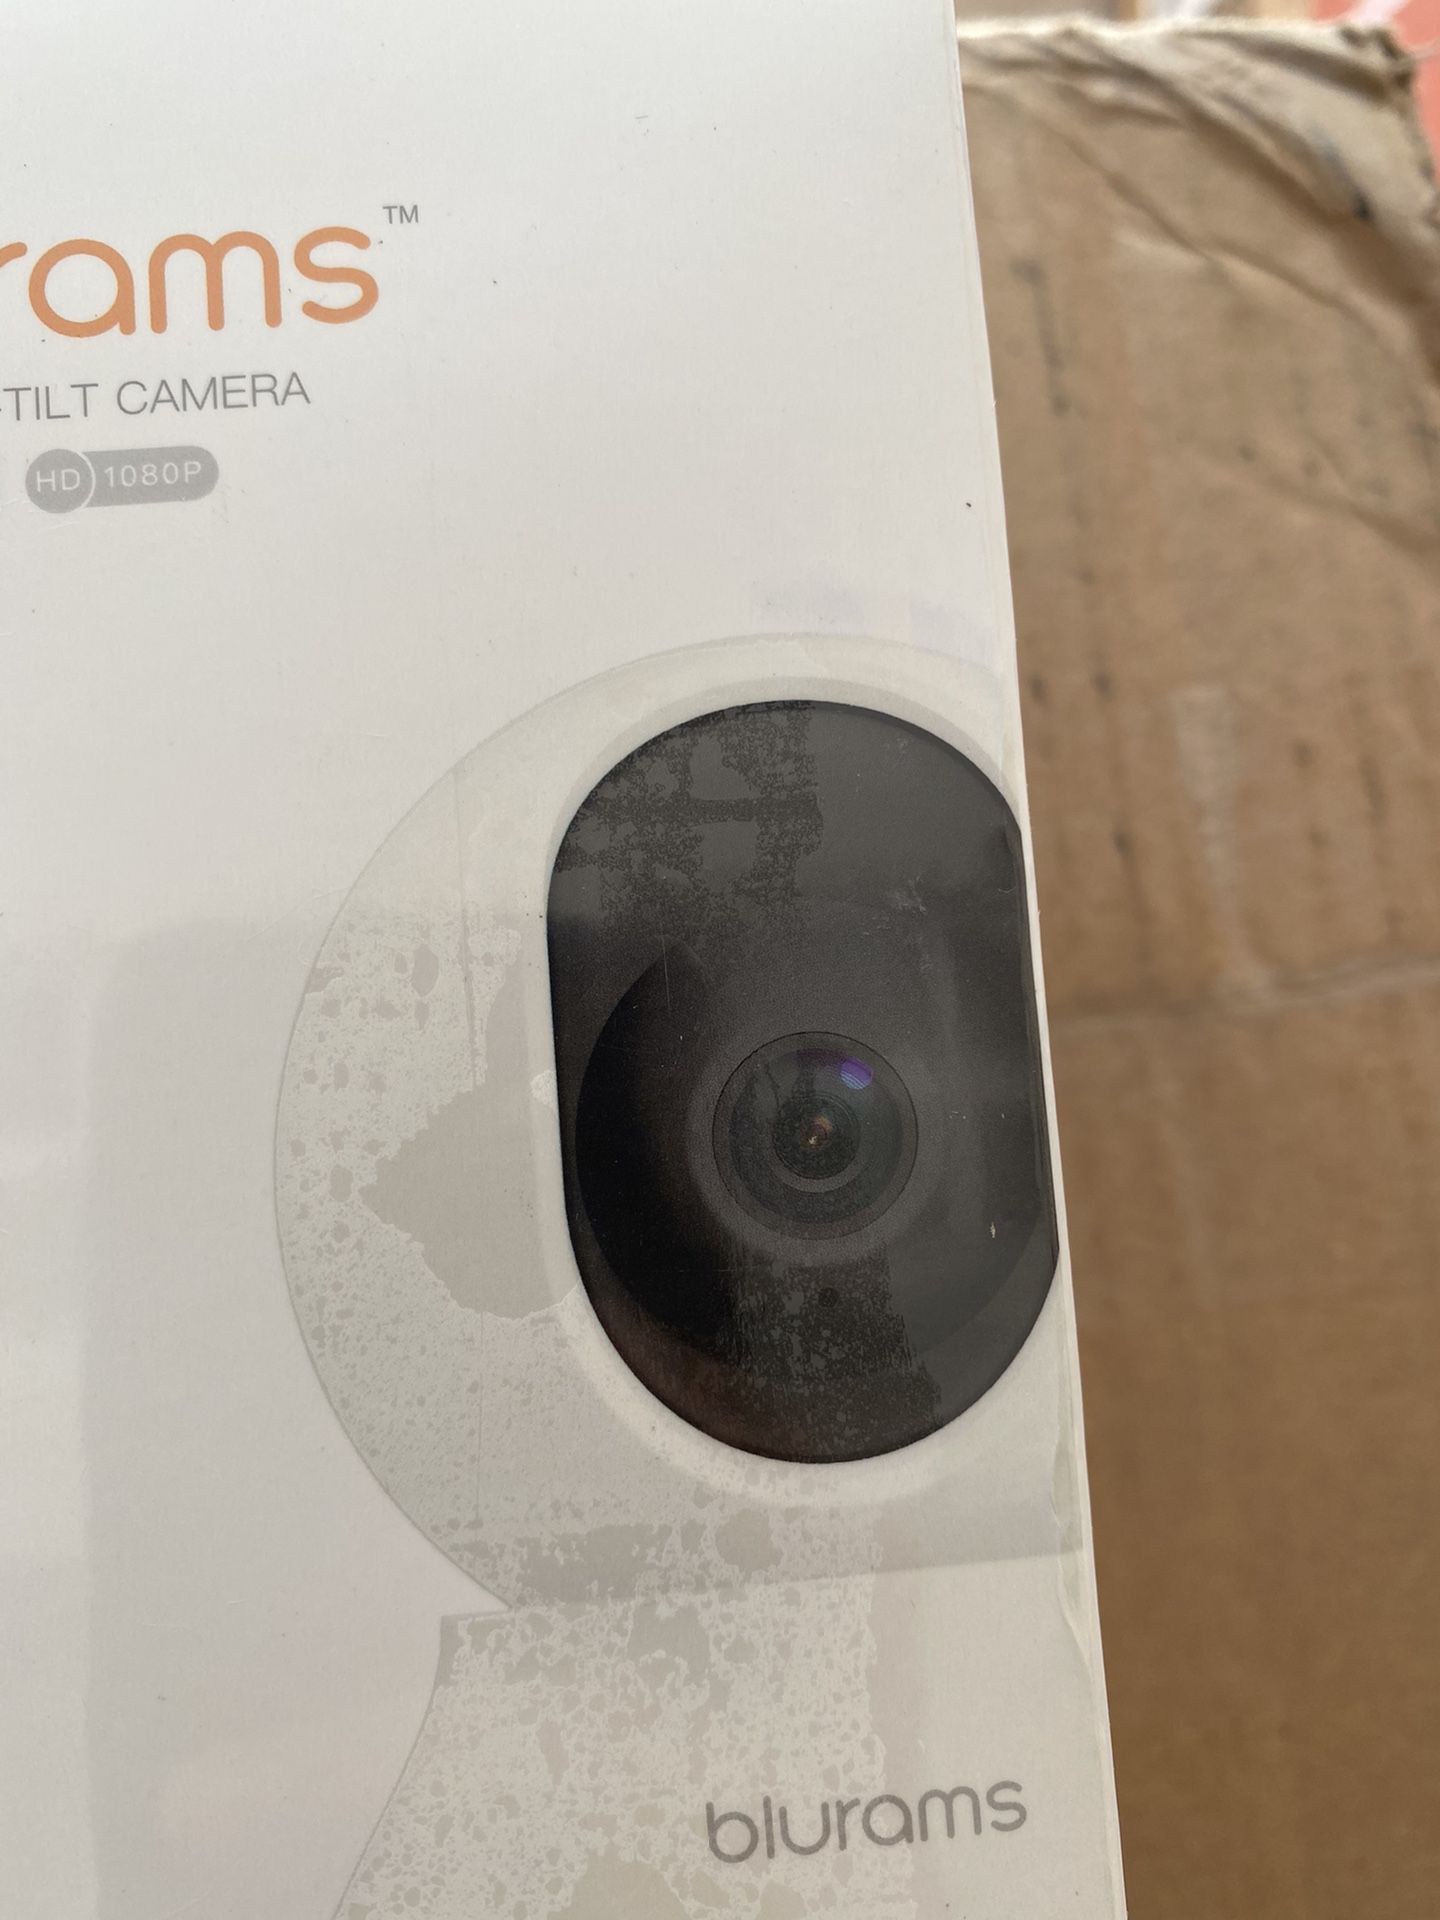 Bluram smart security camera